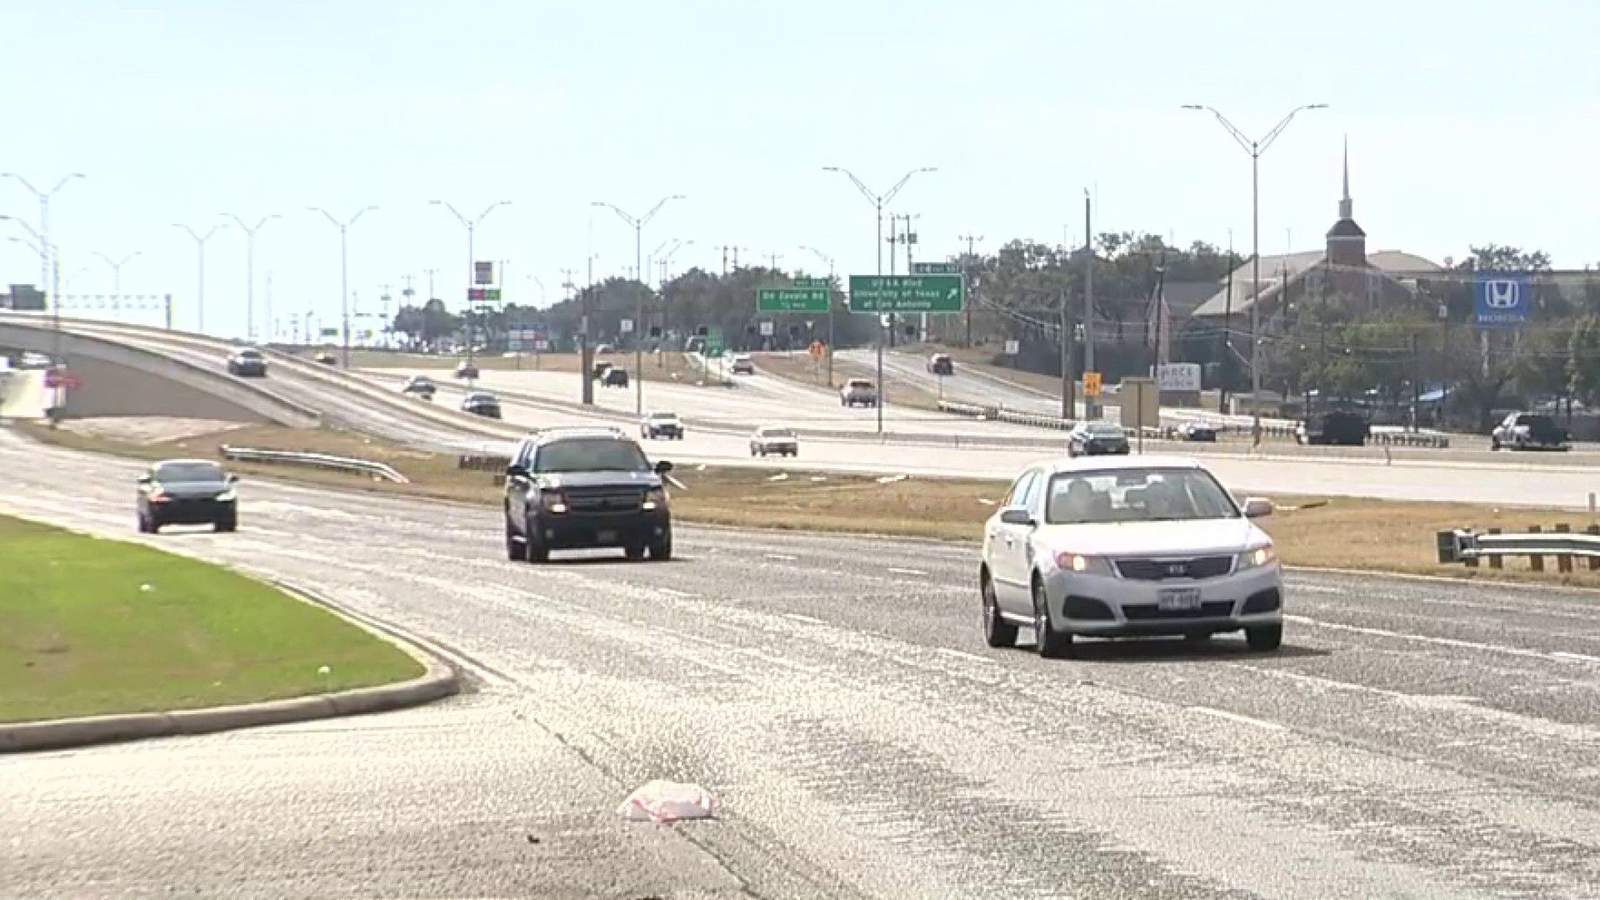 San Antonio highways close due to increased freezing rain, officials say